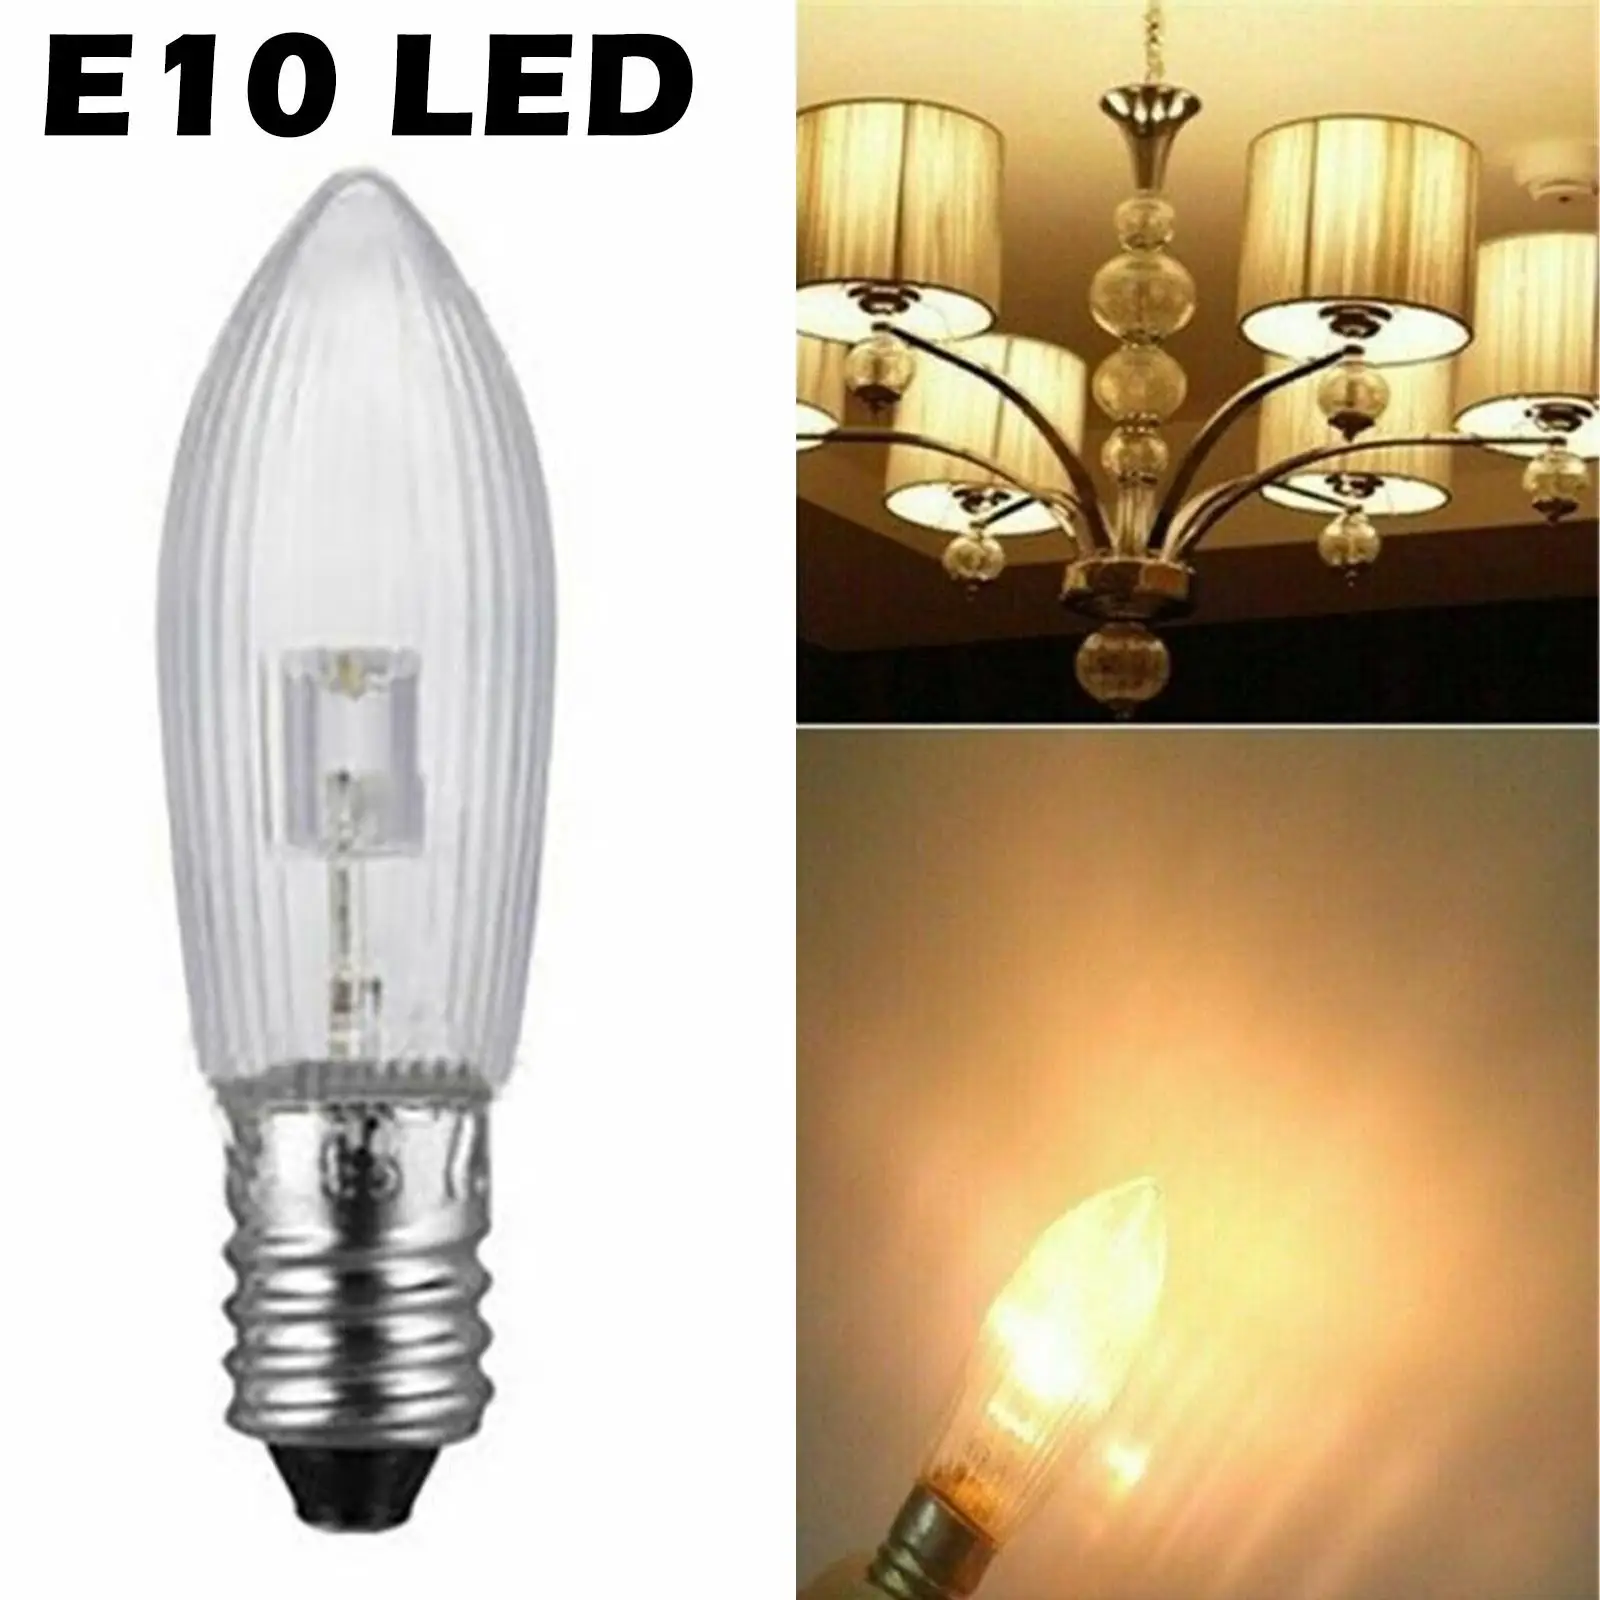 1pc E10 LED Bulbs Light Replacement Lamp Bulbs 10V-55V AC Bathroom Kitchen Home Lamps Bulb Decoration Lights For String Lig O5Q8